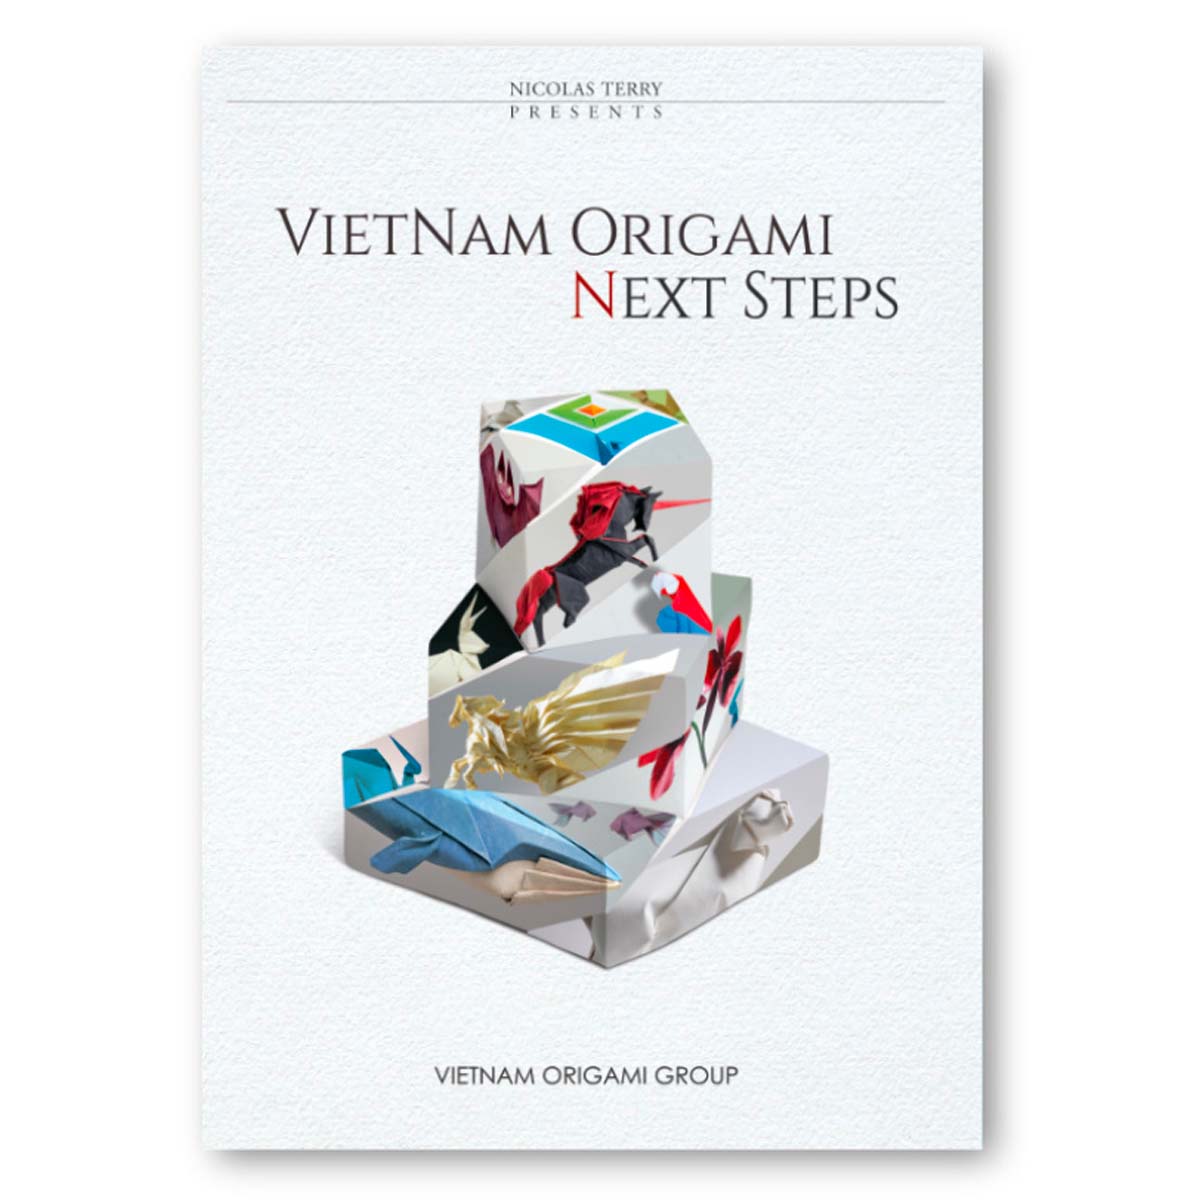 VOG3-VOL 12 VIETNAM ORIGAMI GROUP #3 - NEXT STEPS